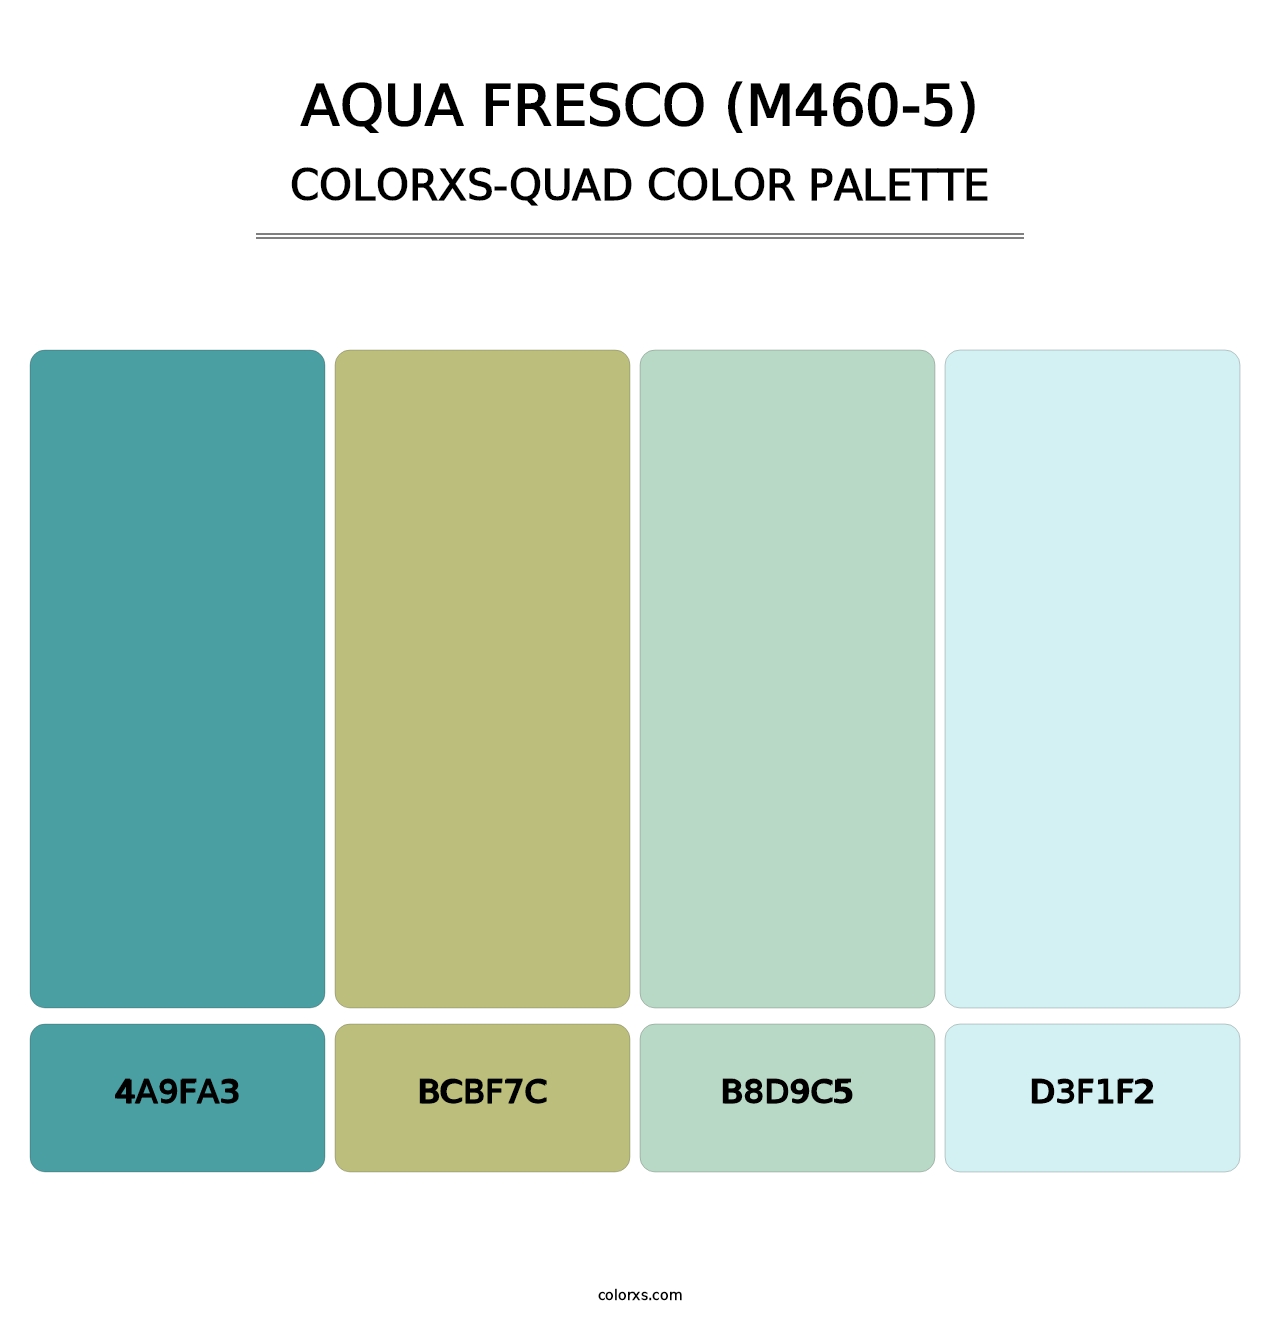 Aqua Fresco (M460-5) - Colorxs Quad Palette